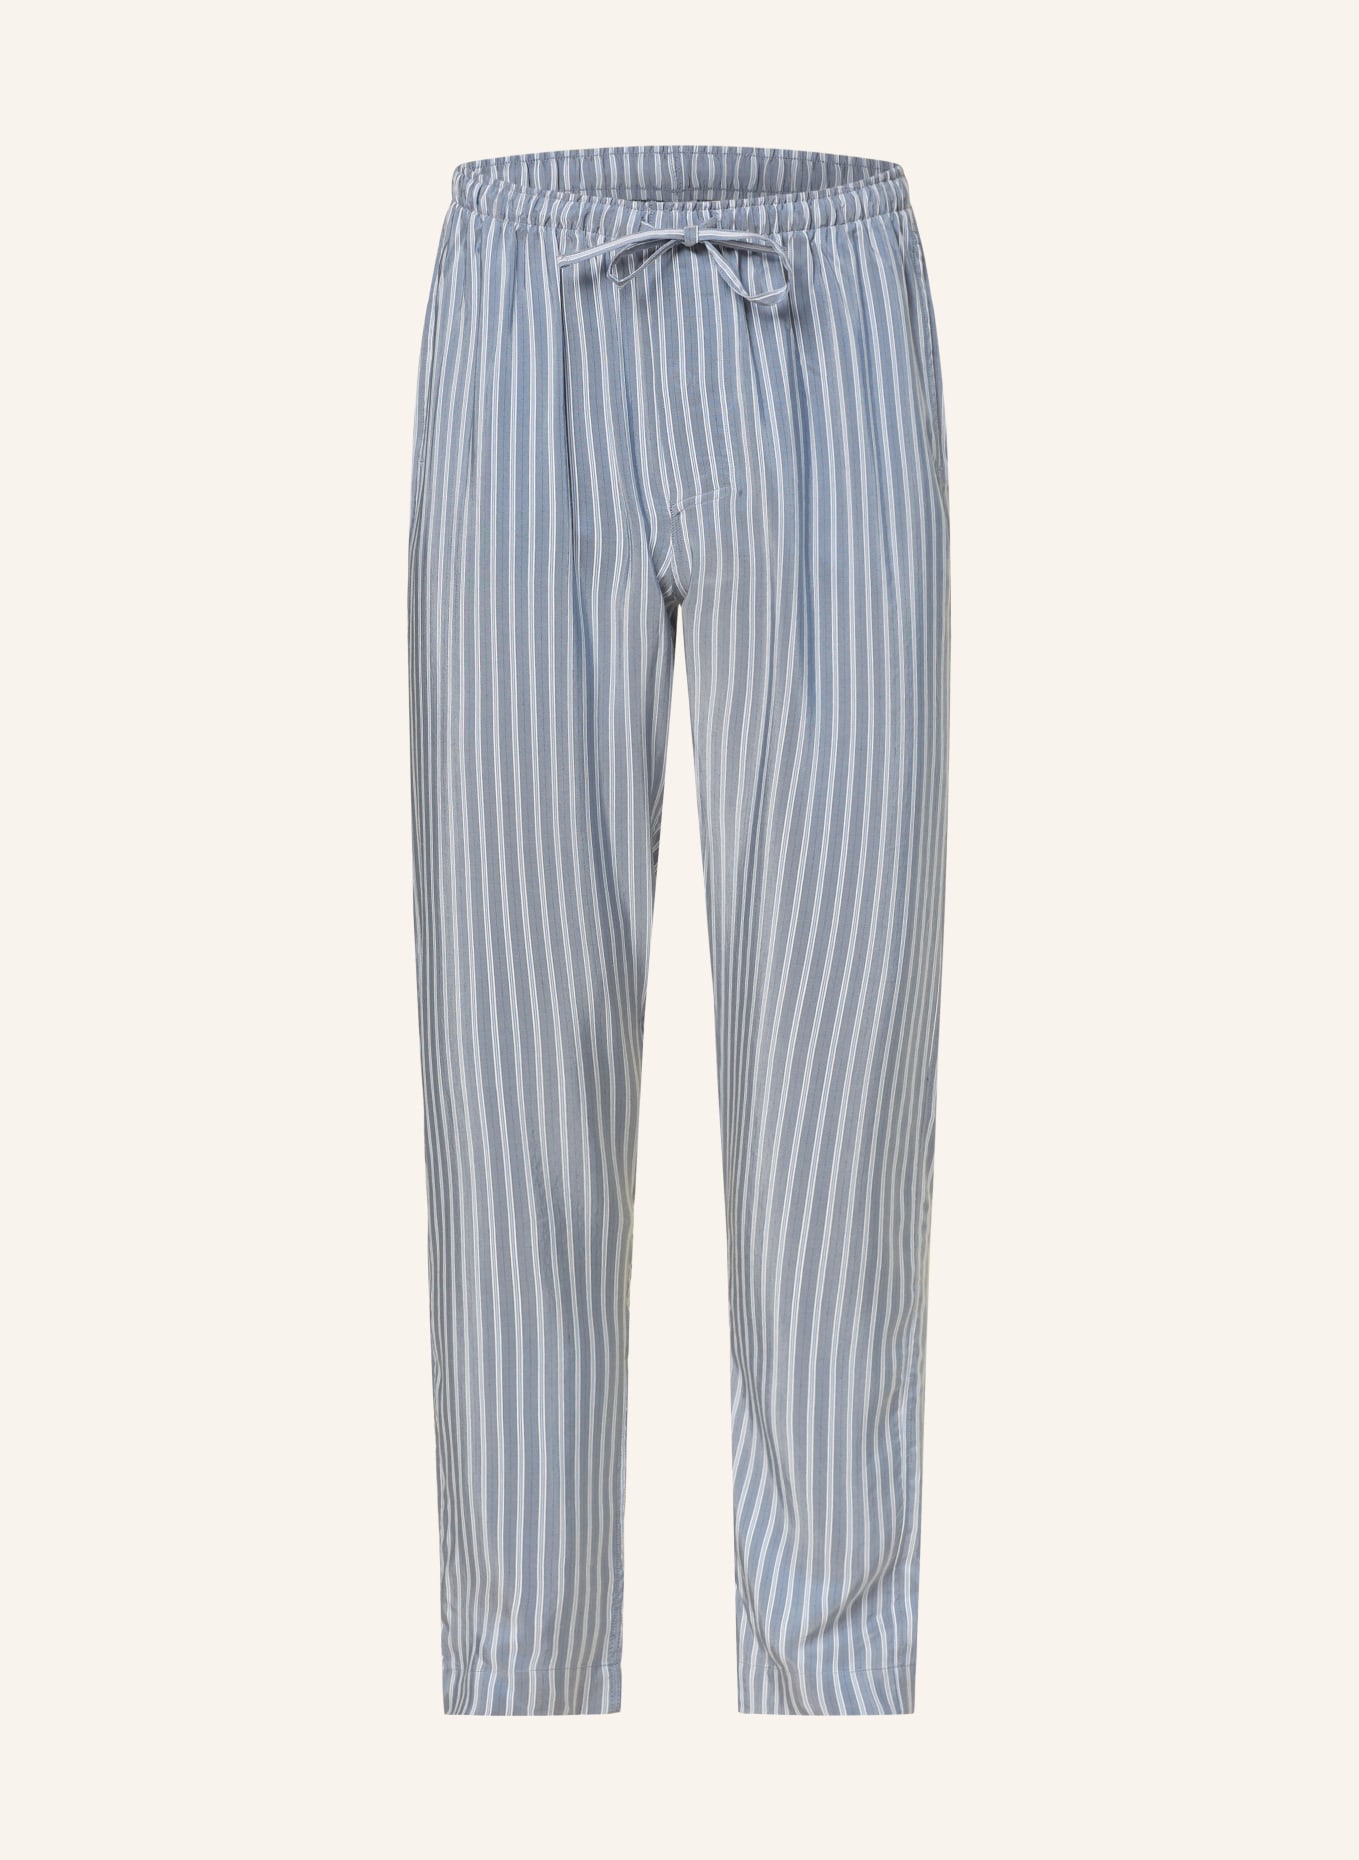 zimmerli Pajama pants PINSTRIPES, Color: GRAY/ WHITE (Image 1)